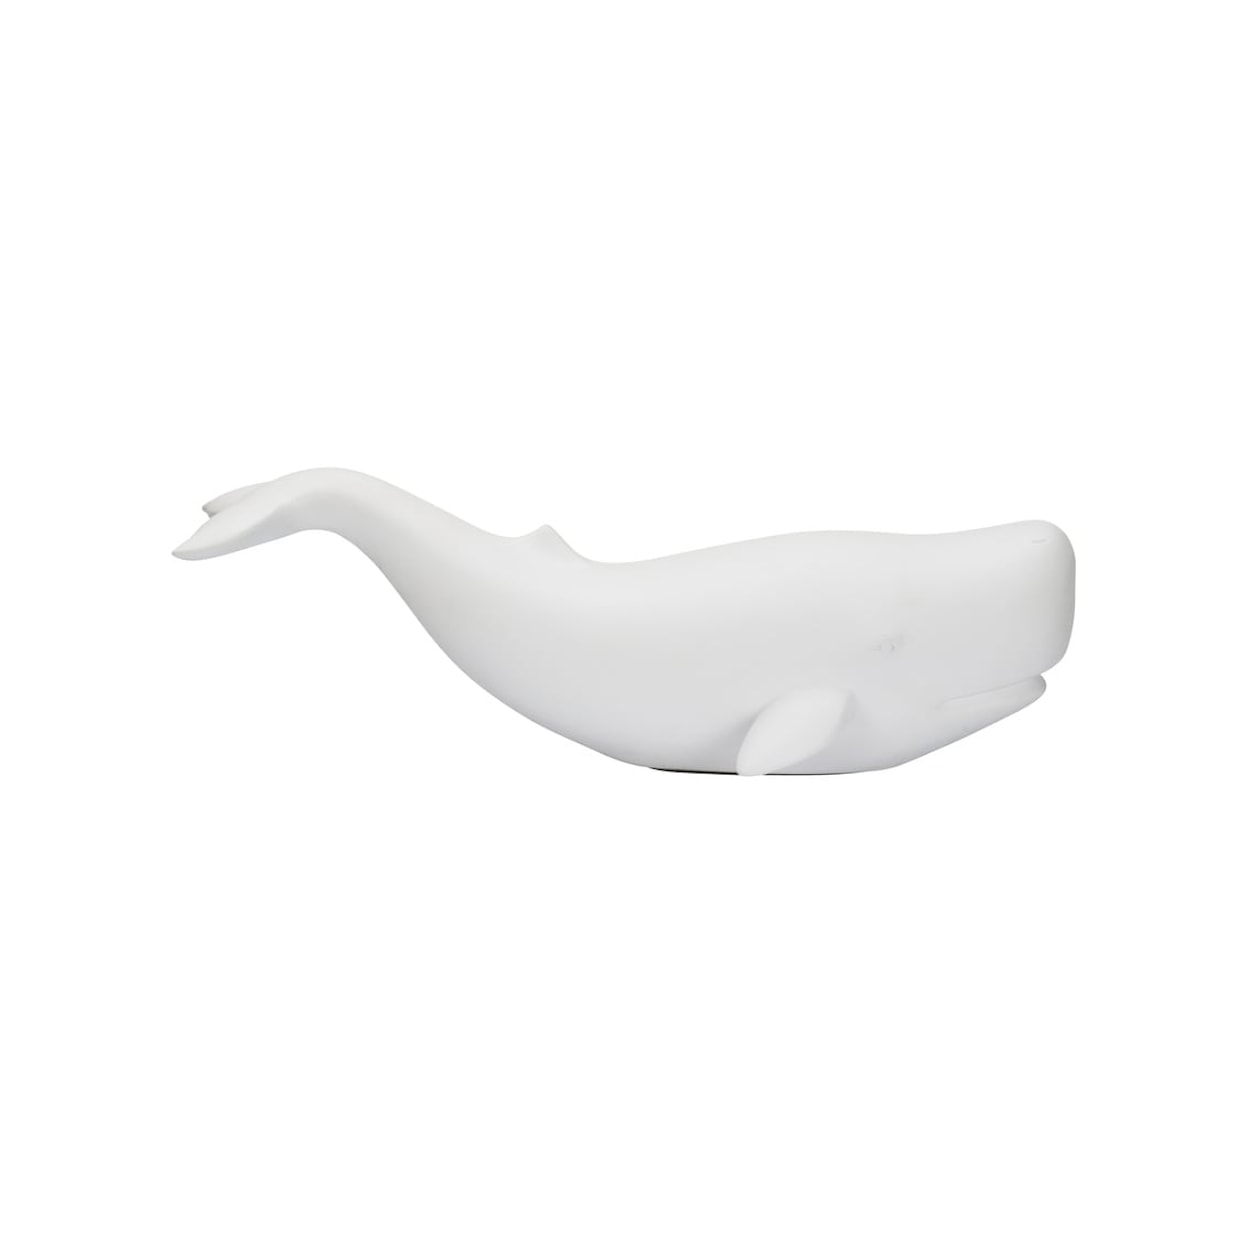 Chelsea House Decorative Accessories Whale - White